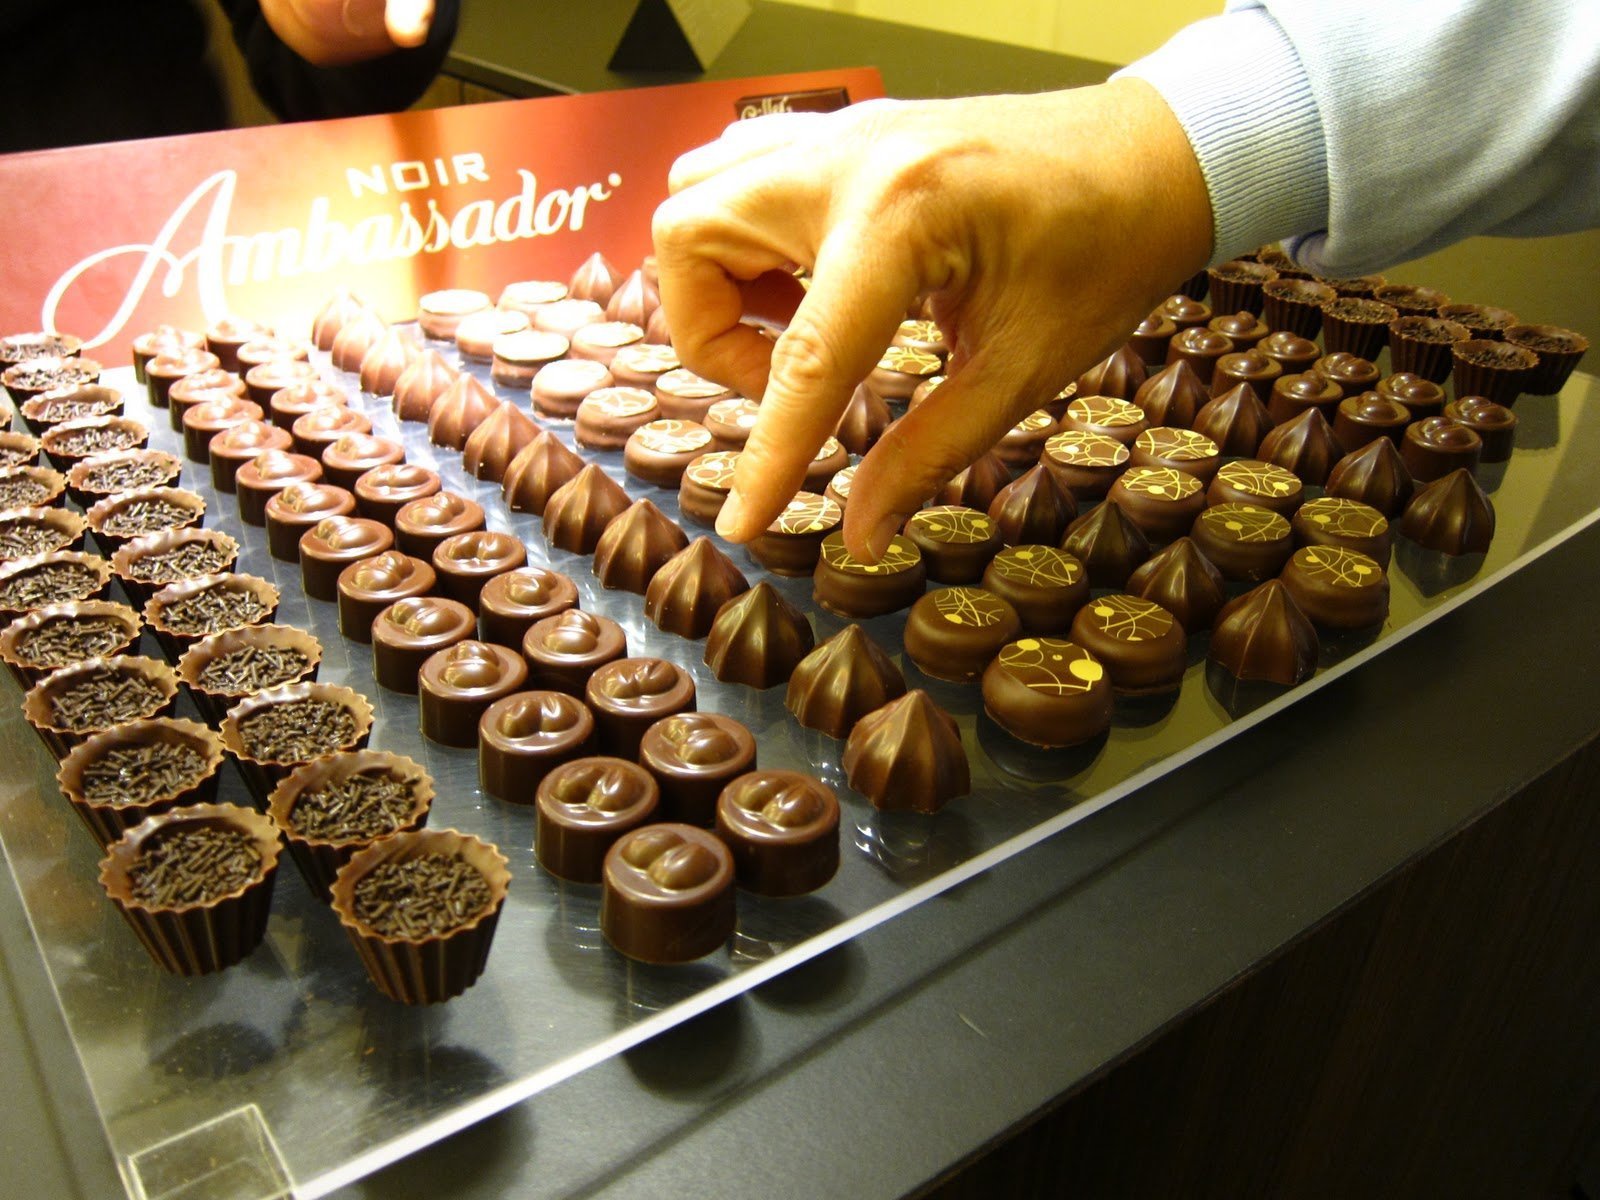 Bachmann шоколадная фабрика. Швейцарский шоколад Cailler. Швейцария шоколадная фабрика Цюрих. Шоколад Cailler музей. Шоколадная фабрика в Швейцарии в броке.